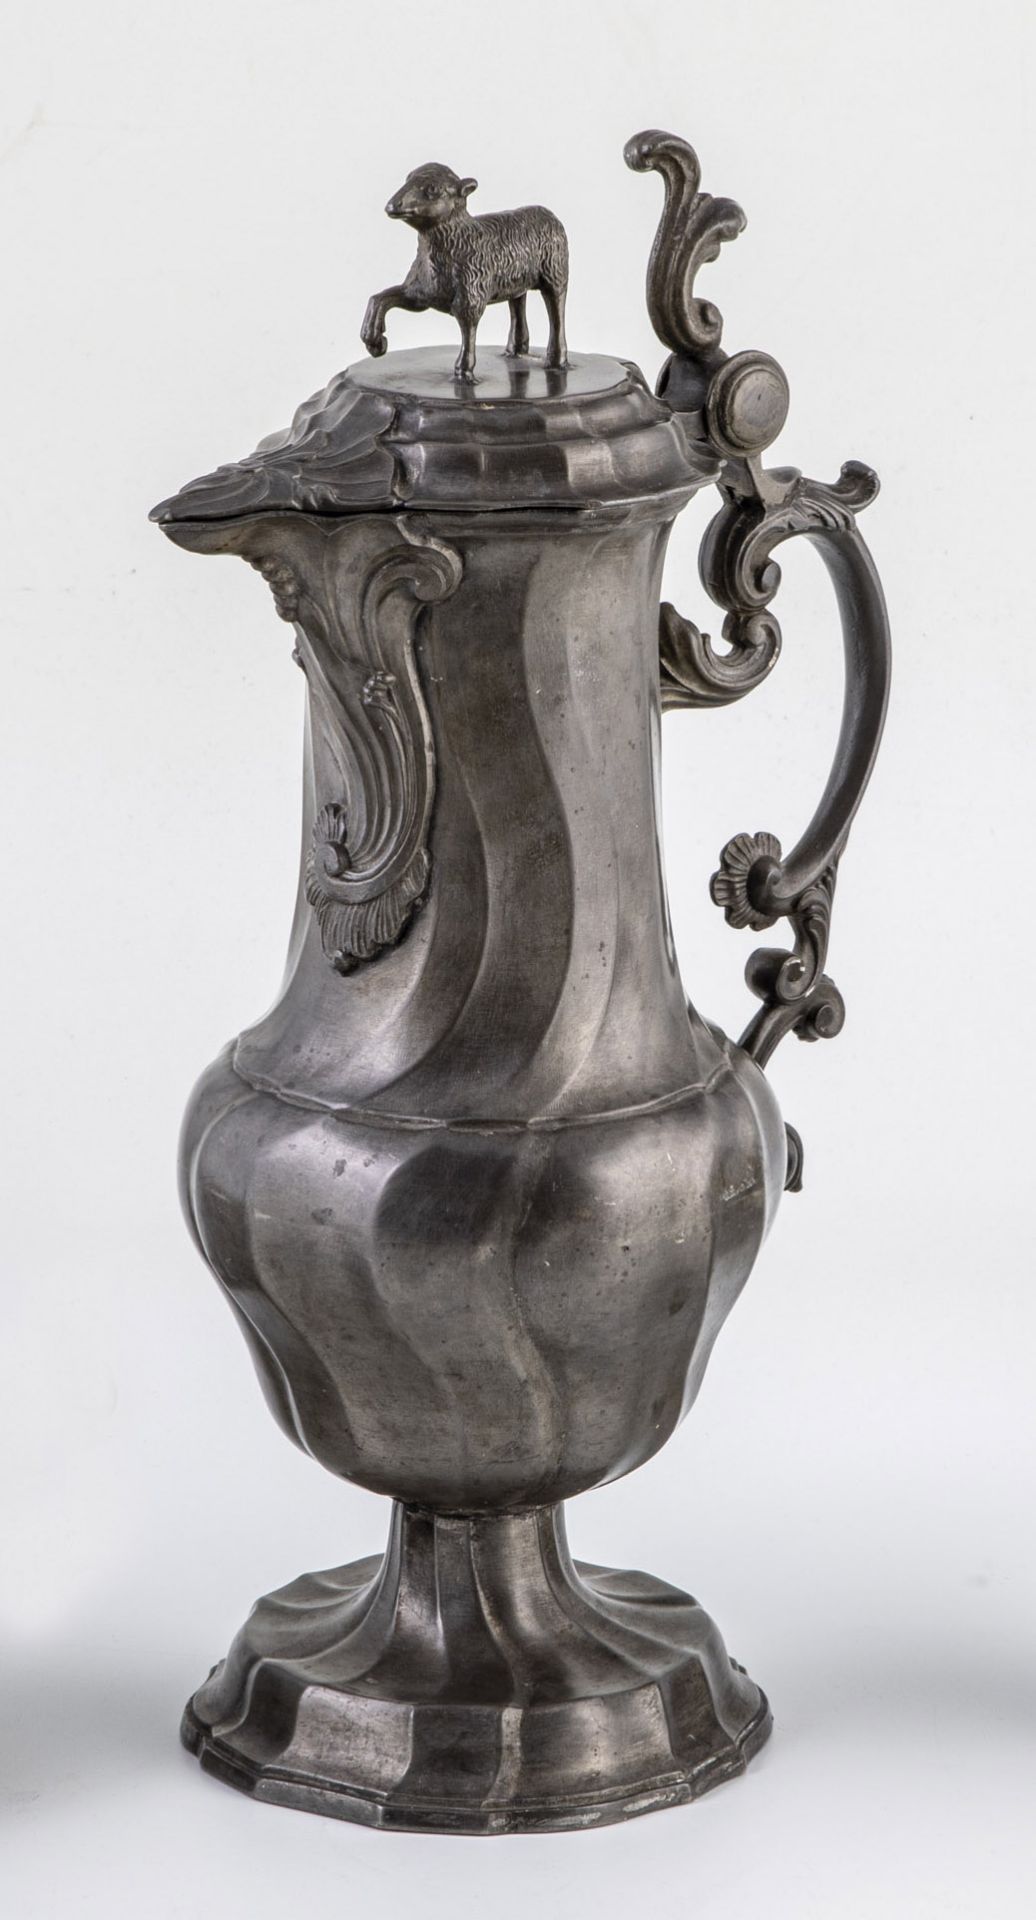 Communion jug made of pewter